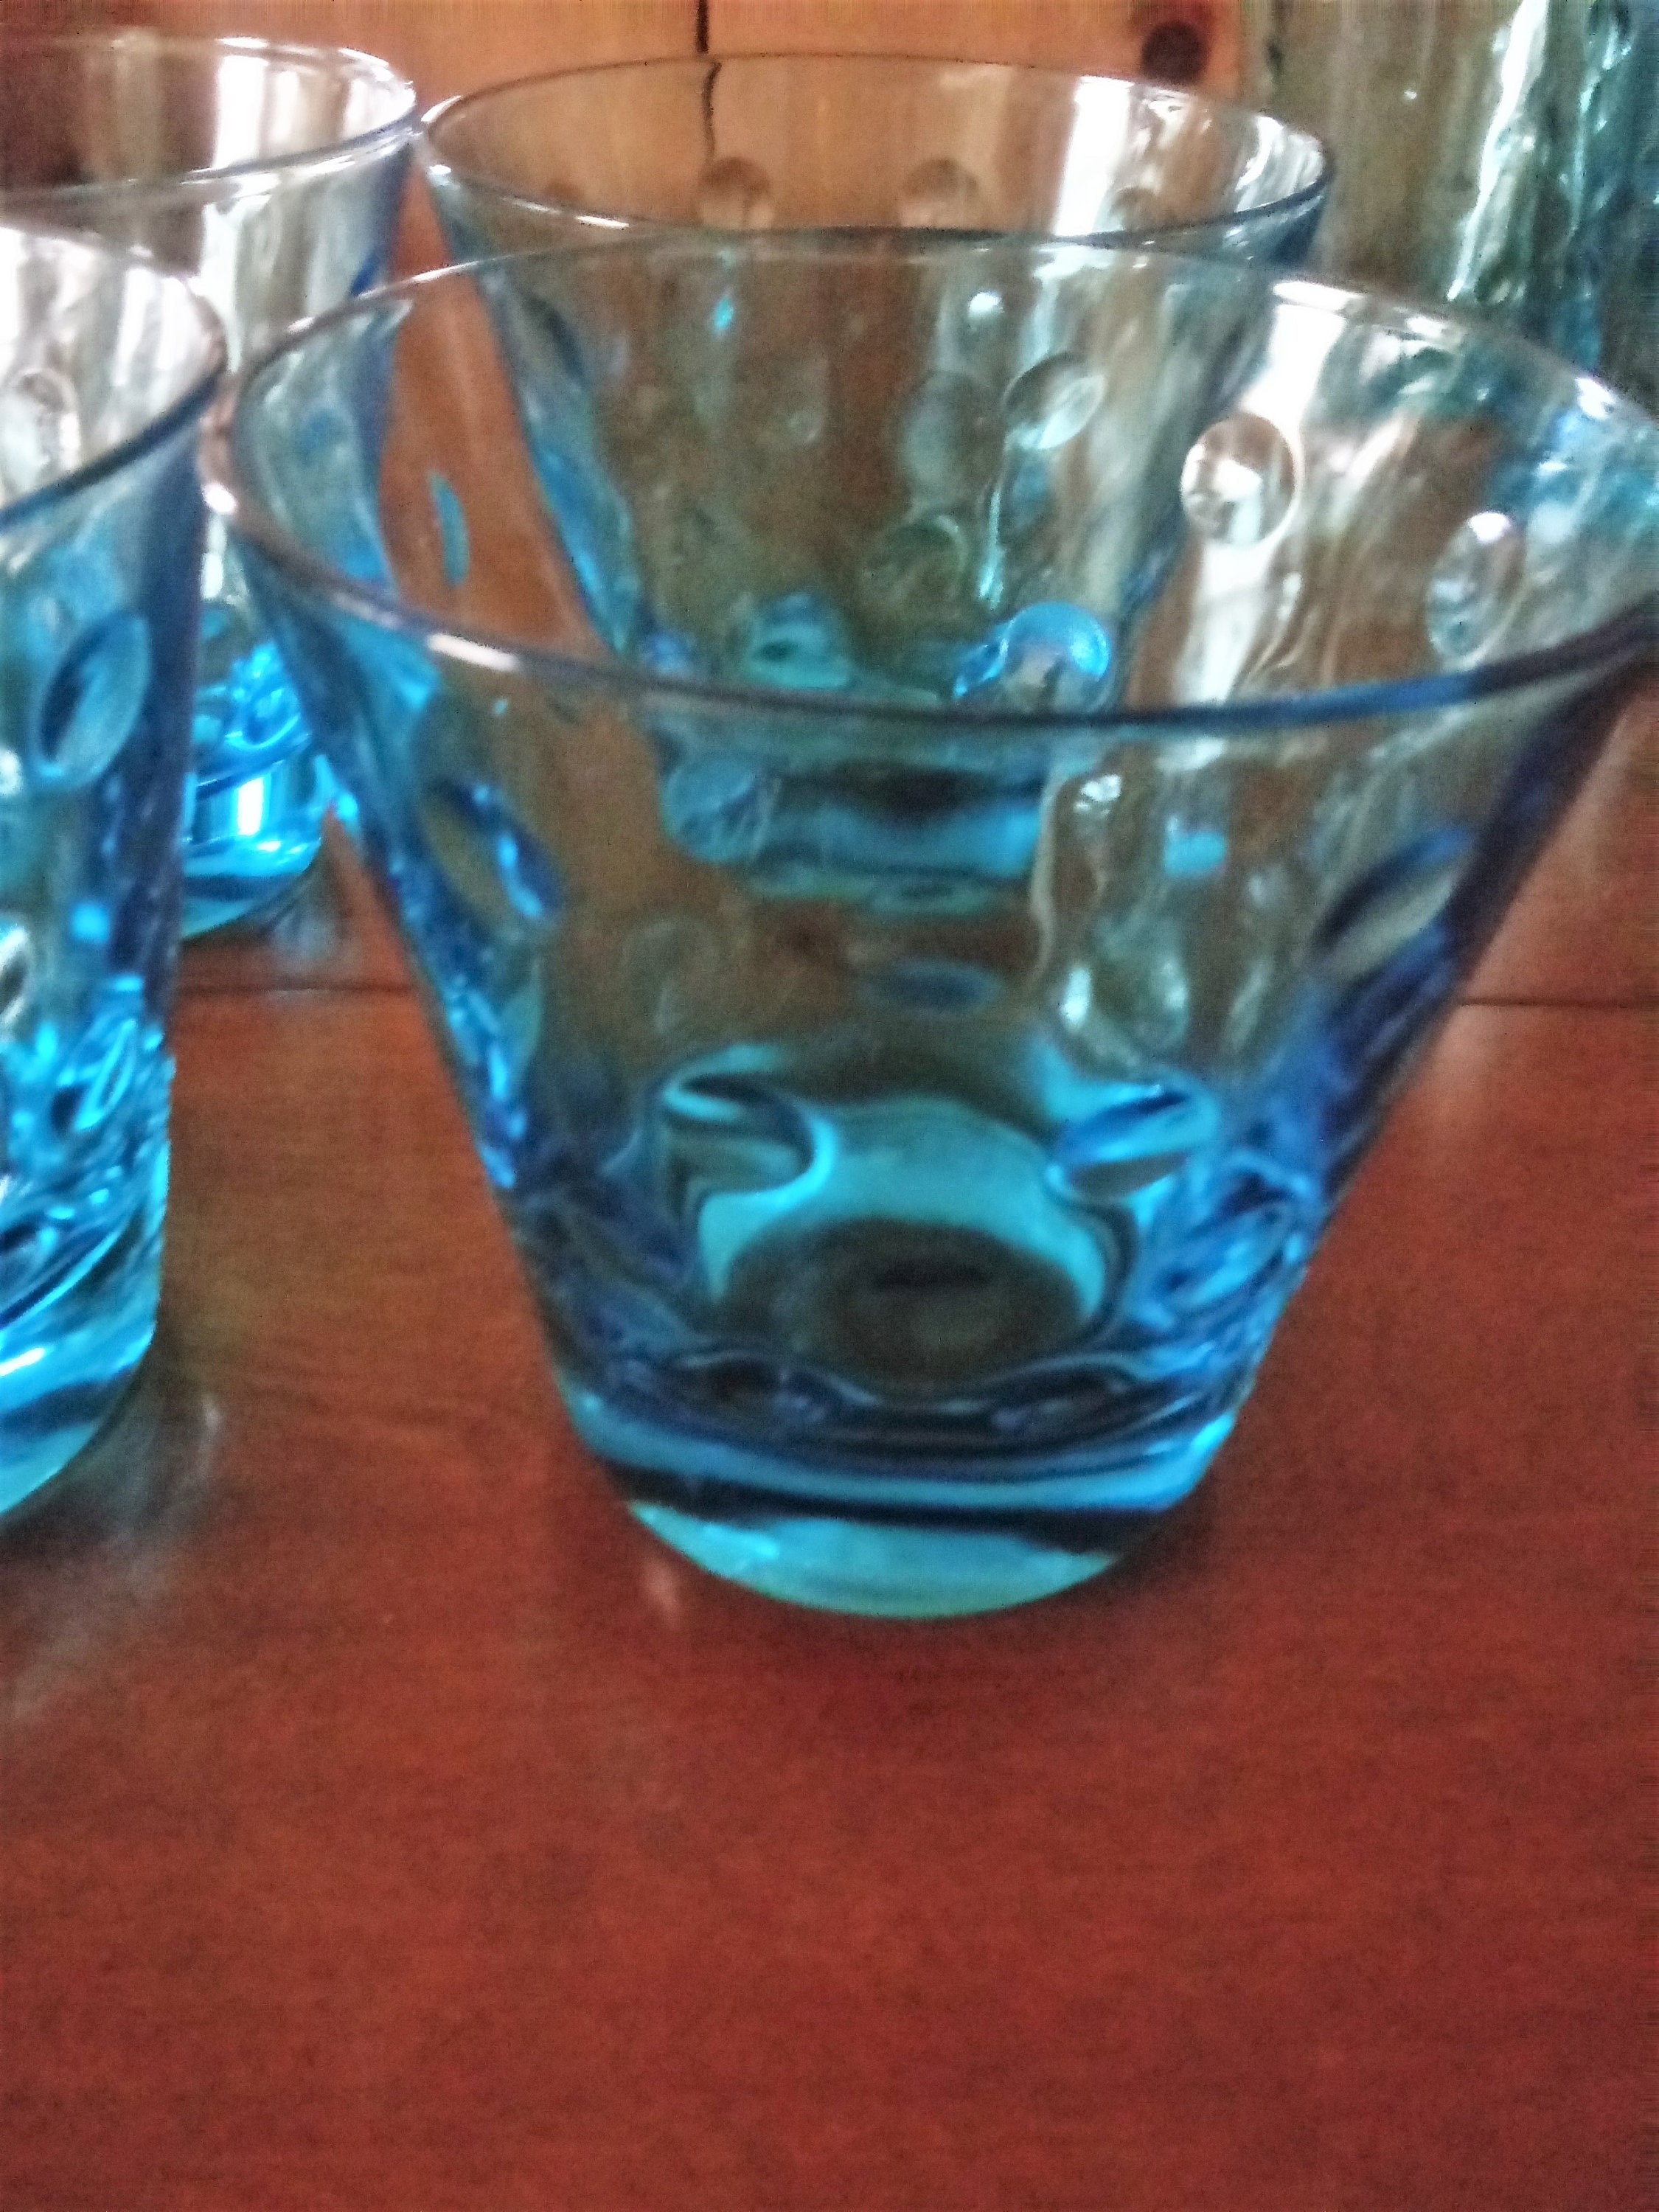 Vintage Libbey Aqua Blue Turquoise Polka Dot Glass Tumblers Drinking Glass